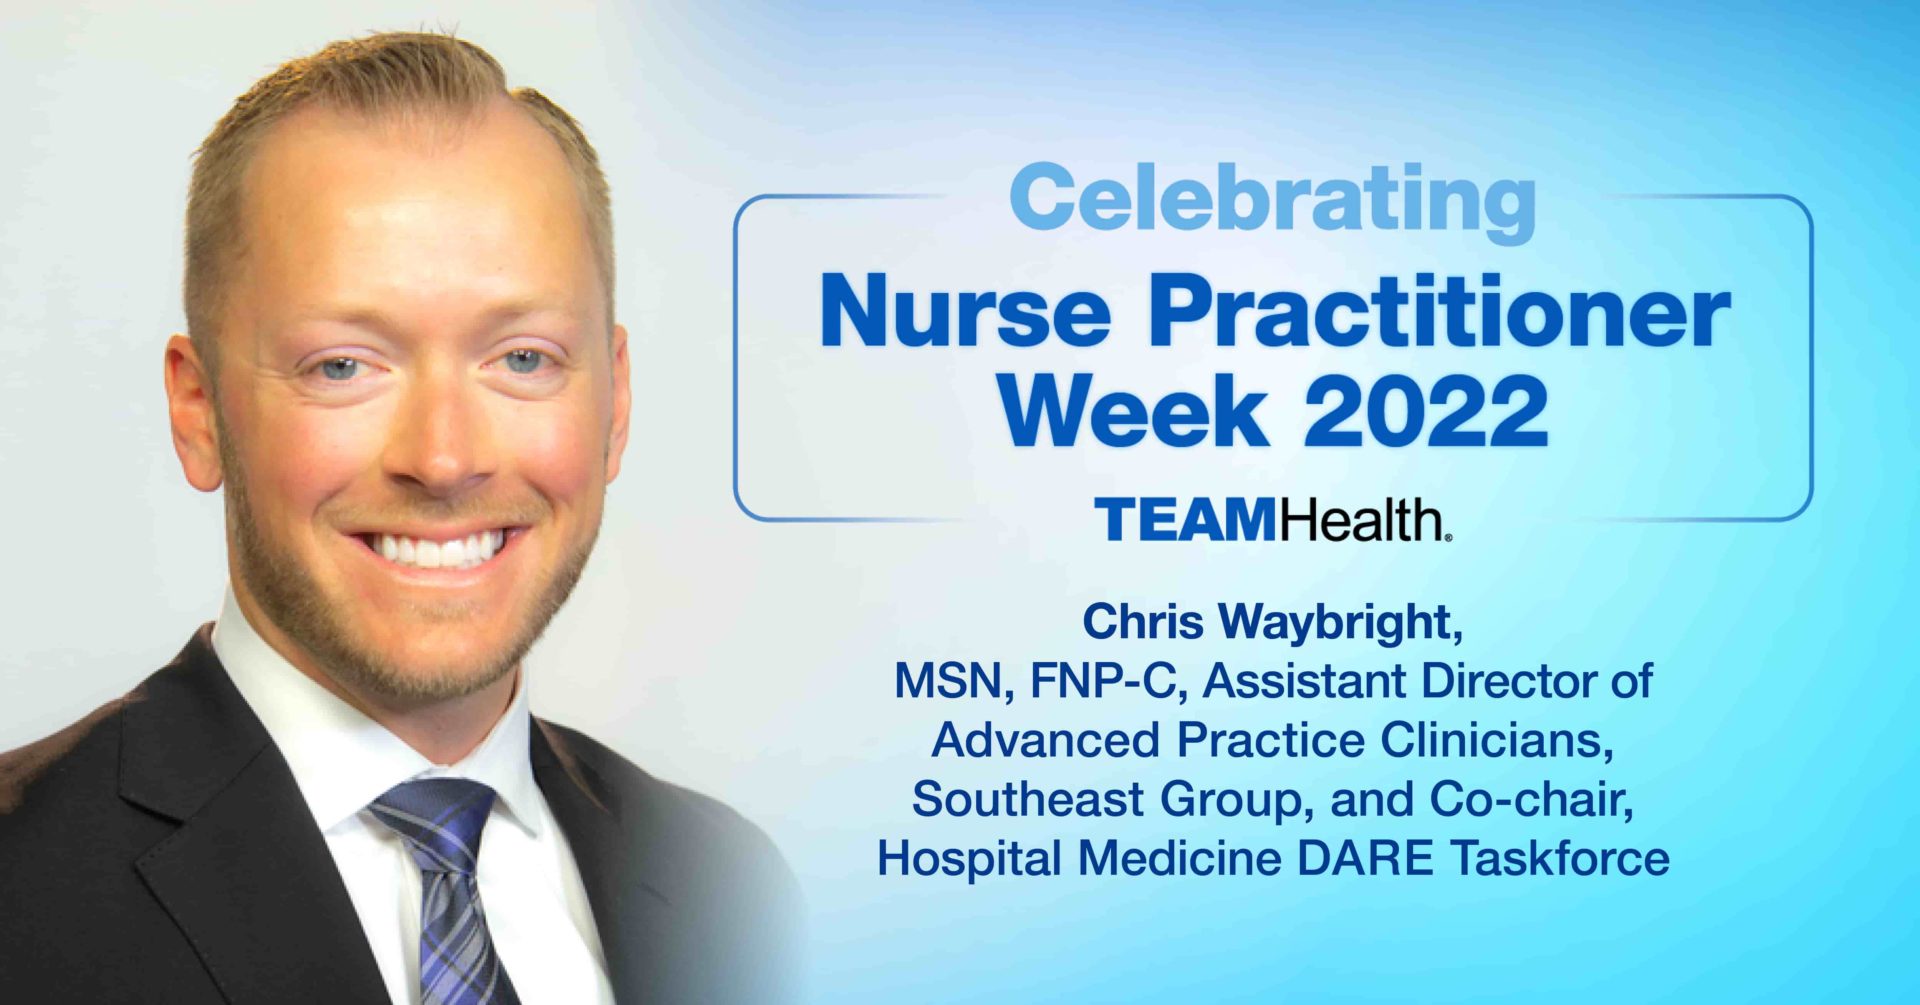 Celebrating Nurse Practitioner Week 2022 Chris Waybright Teamhealth